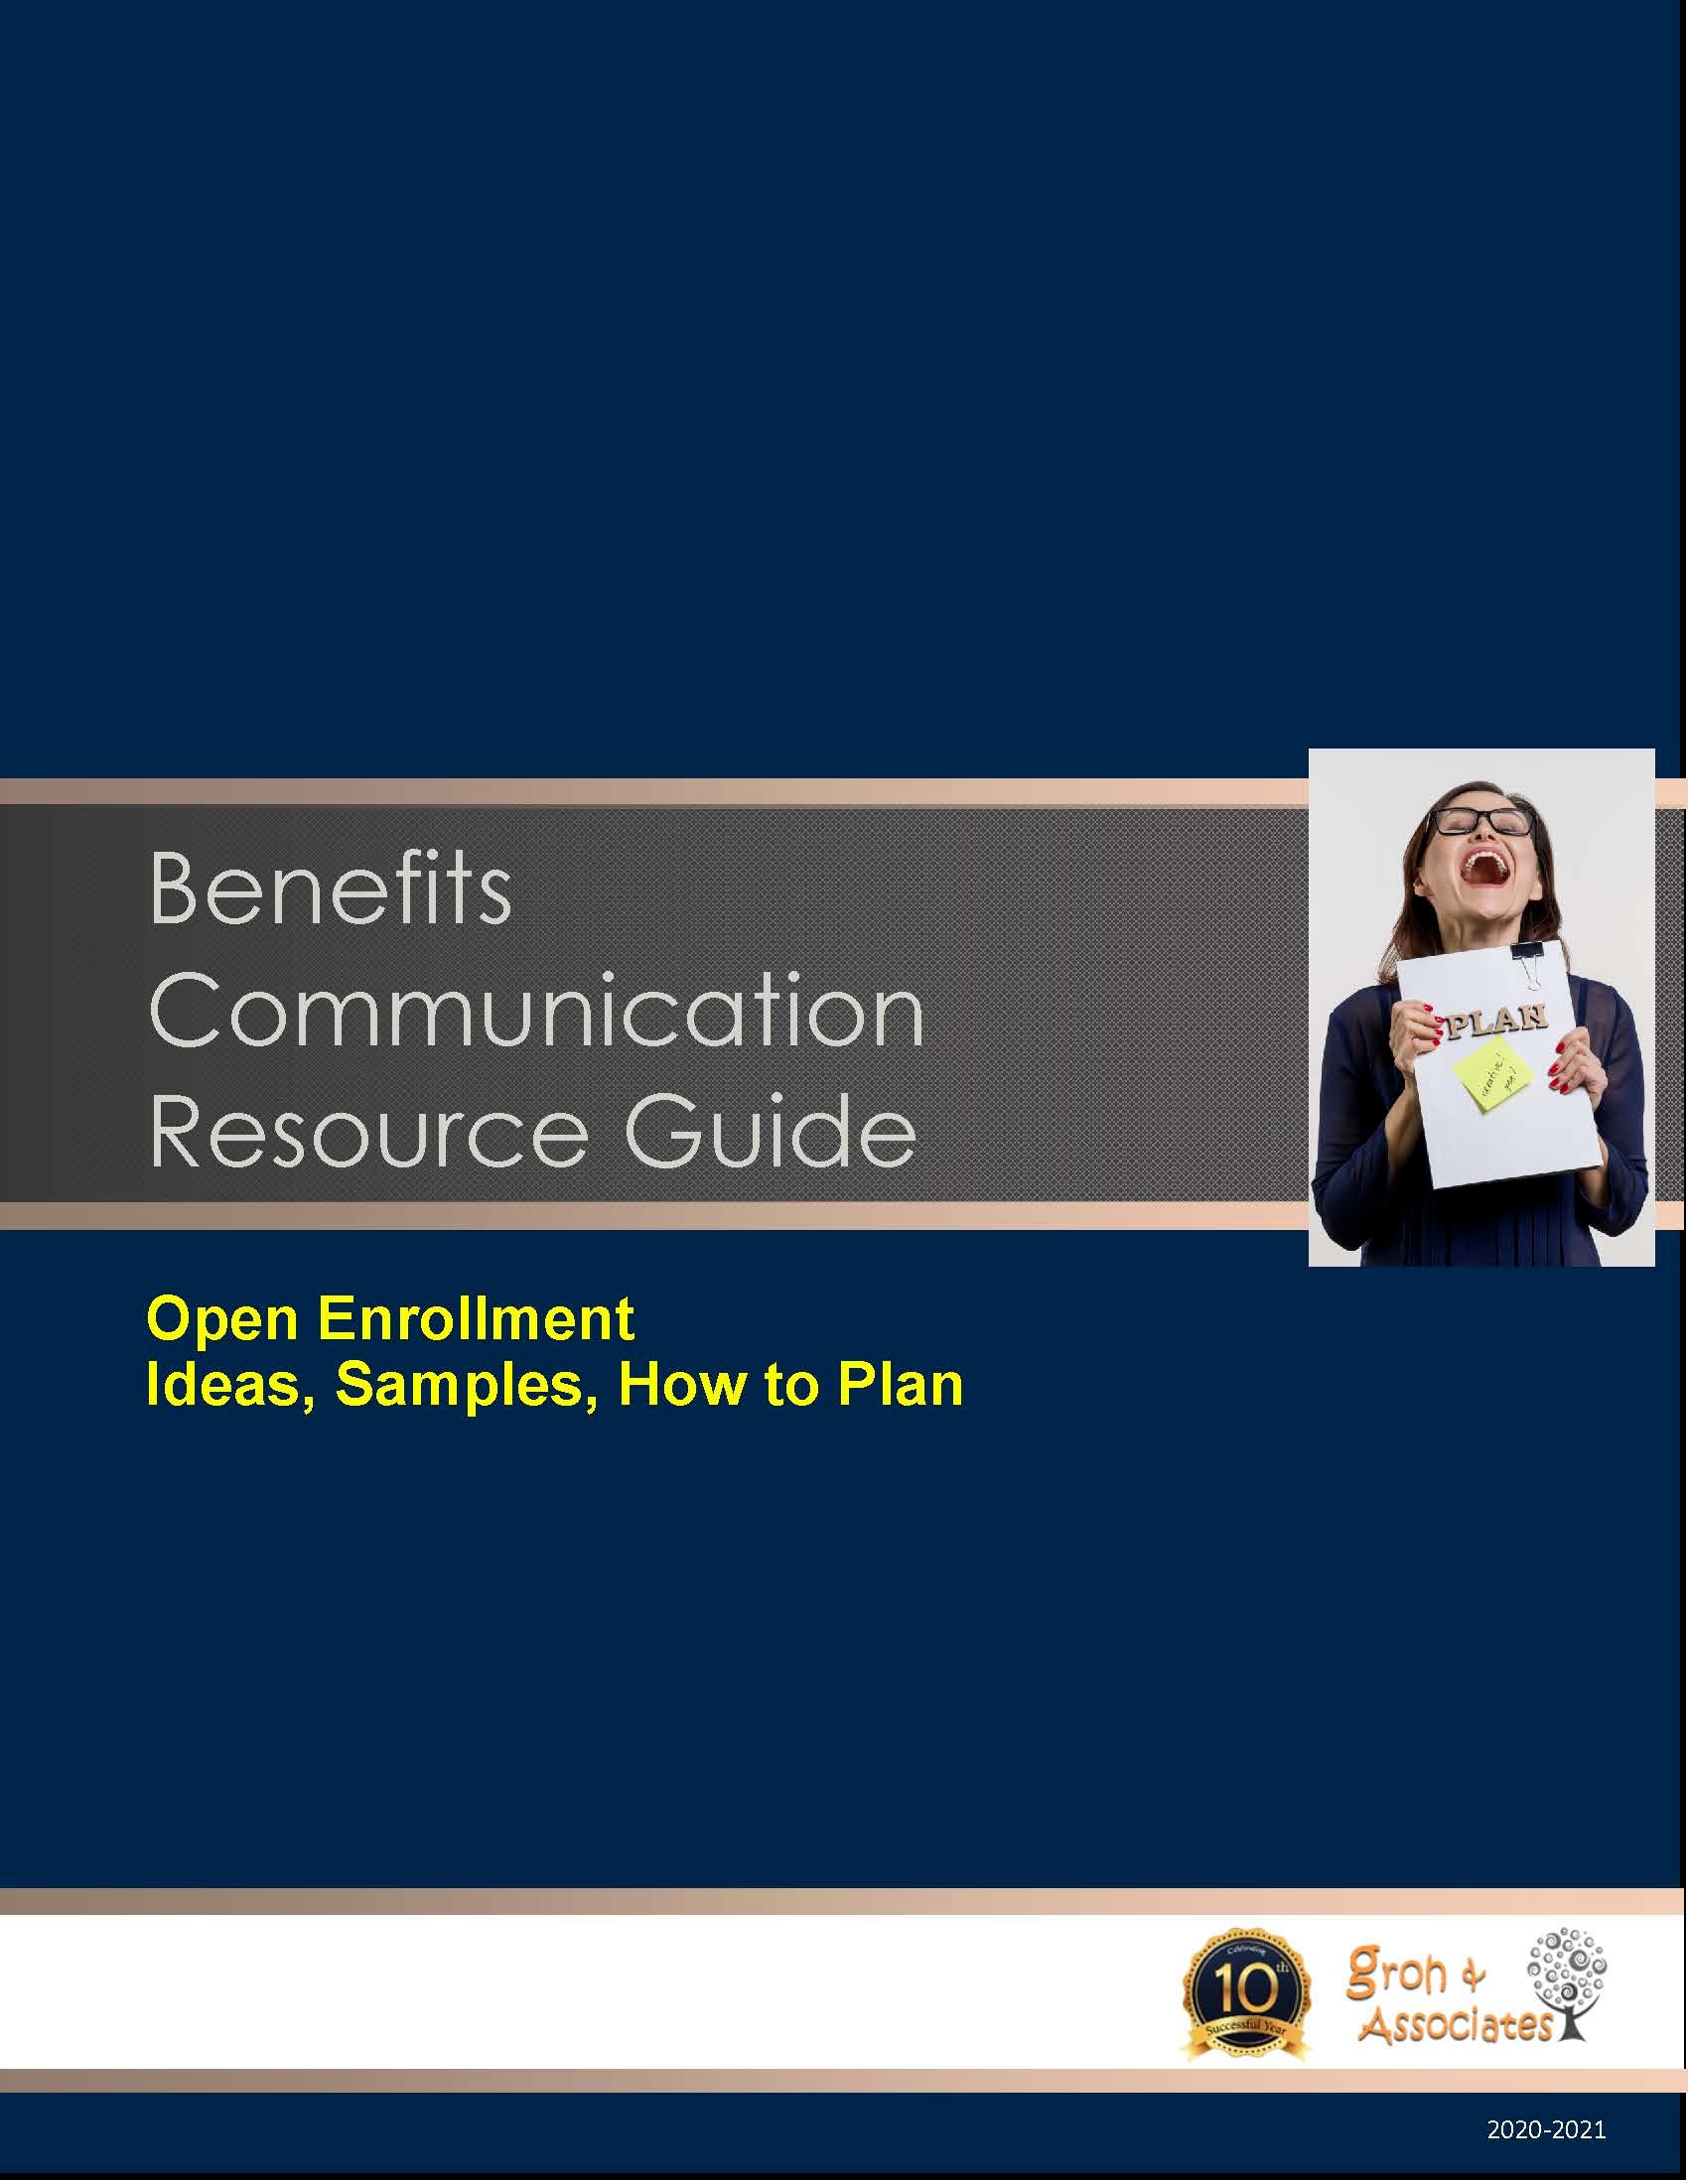 Open Enrollment Communications